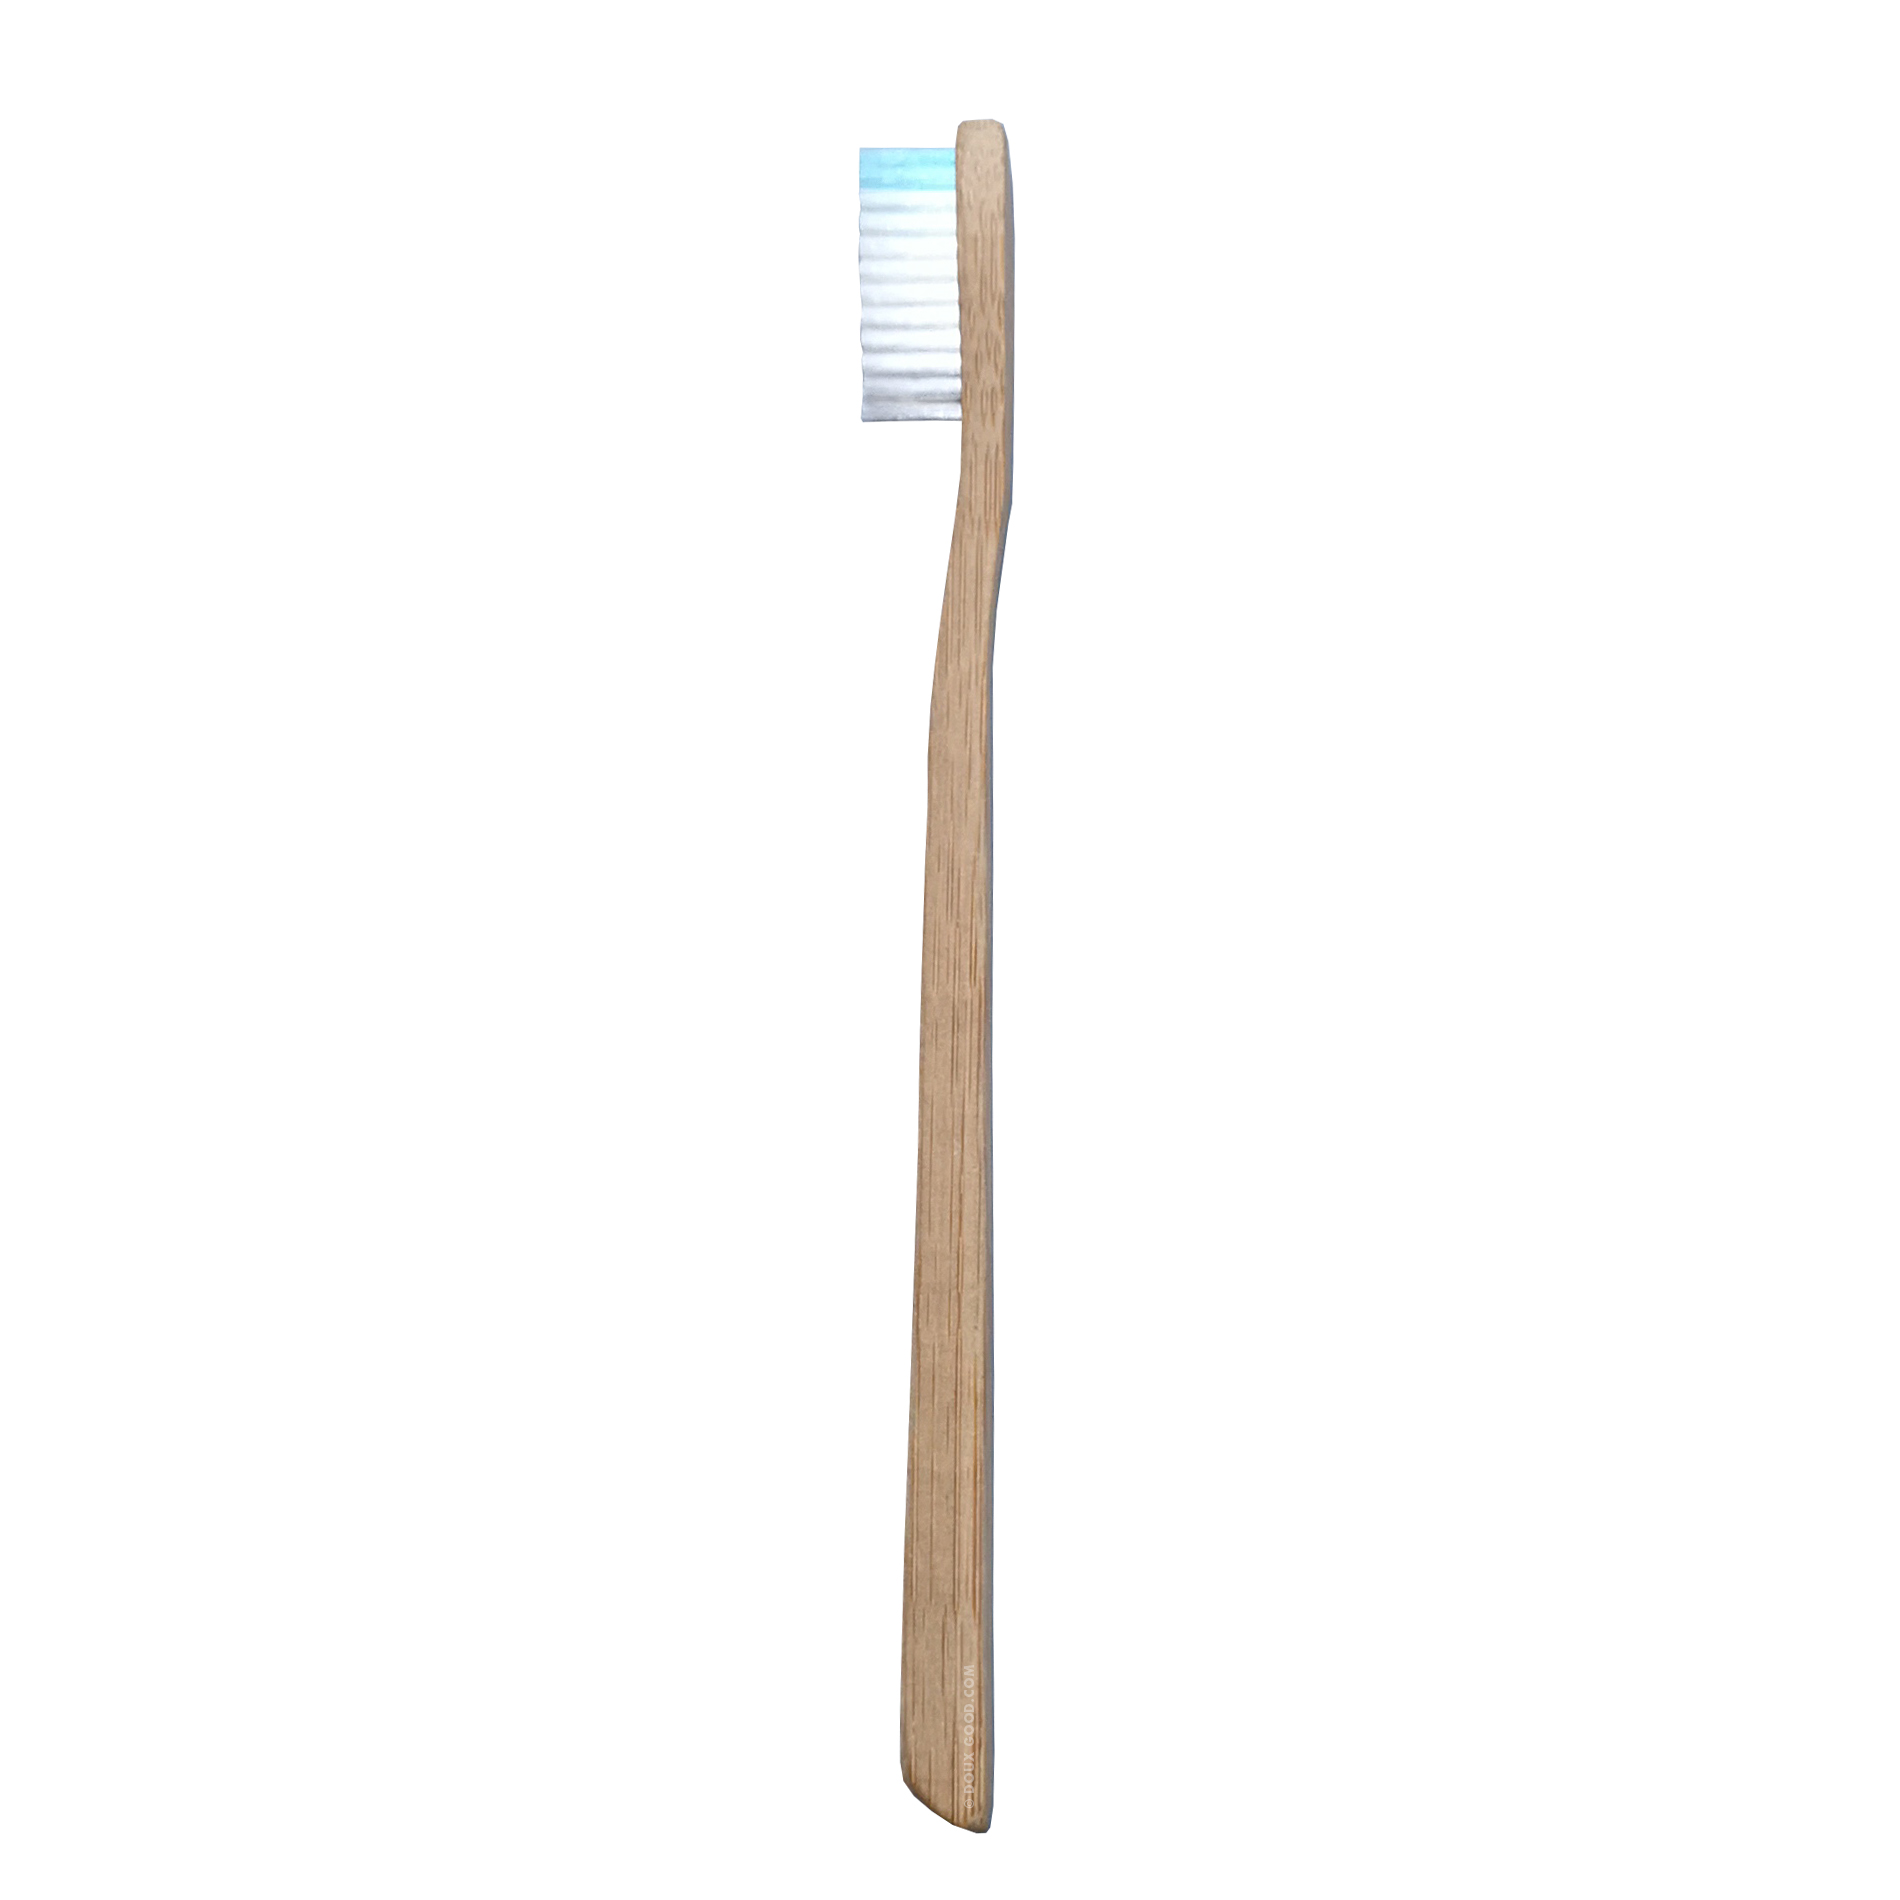 My Boo Company - brosse à dents en bambou - Adulte medium - Bleu foncé